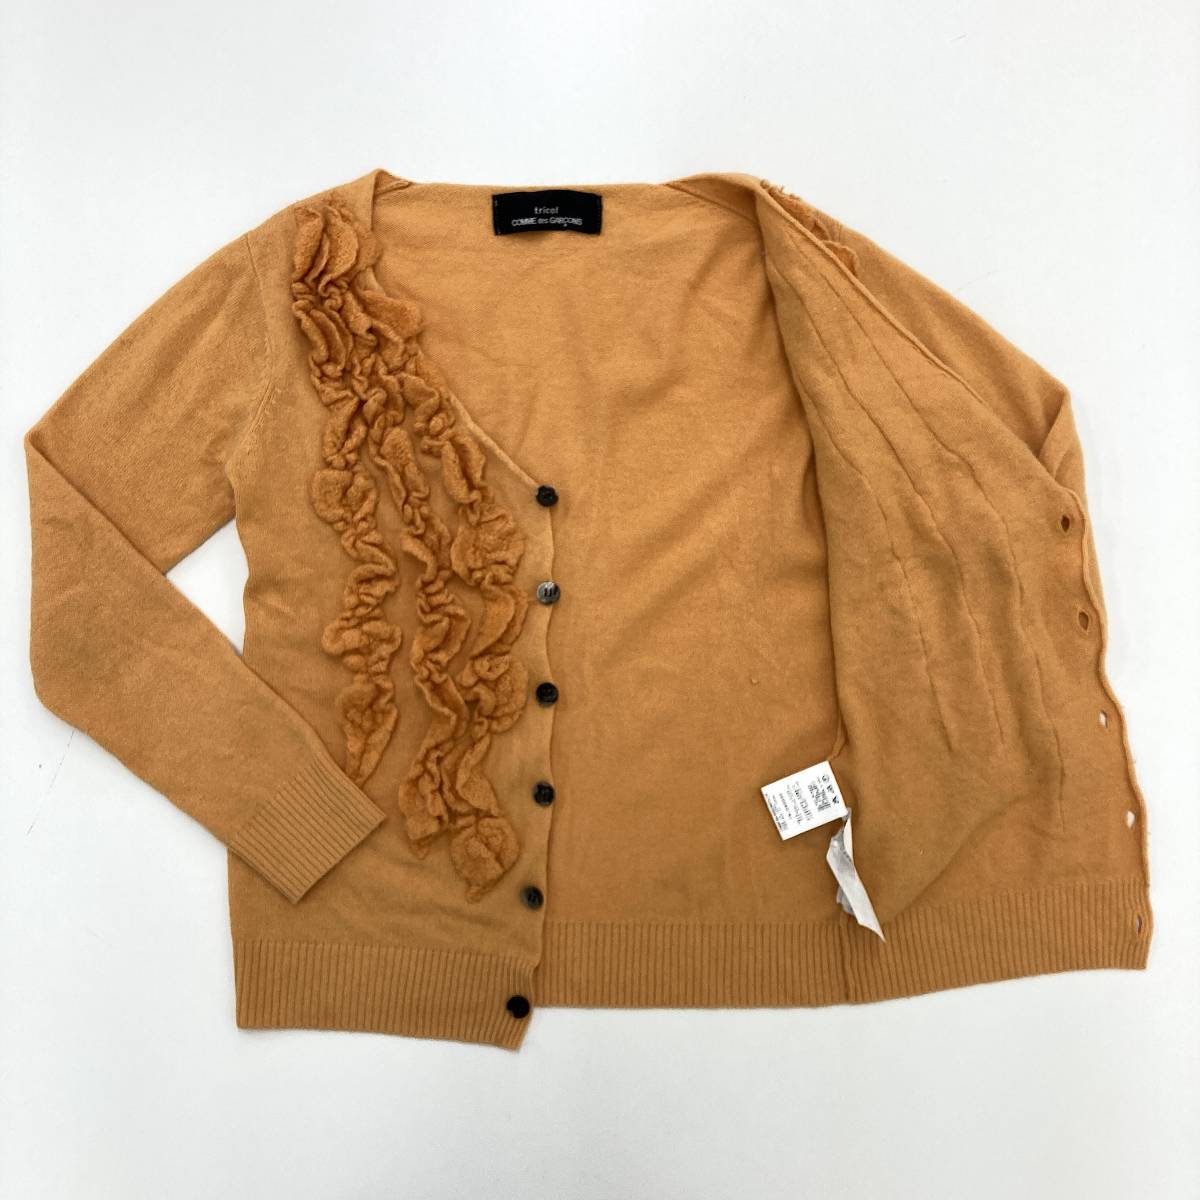 AD1997 tricot COMME des GARCONS оборка вязаный кардиган orange Toriko Comme des Garcons свитер 90s VINTAGE archive 3050213